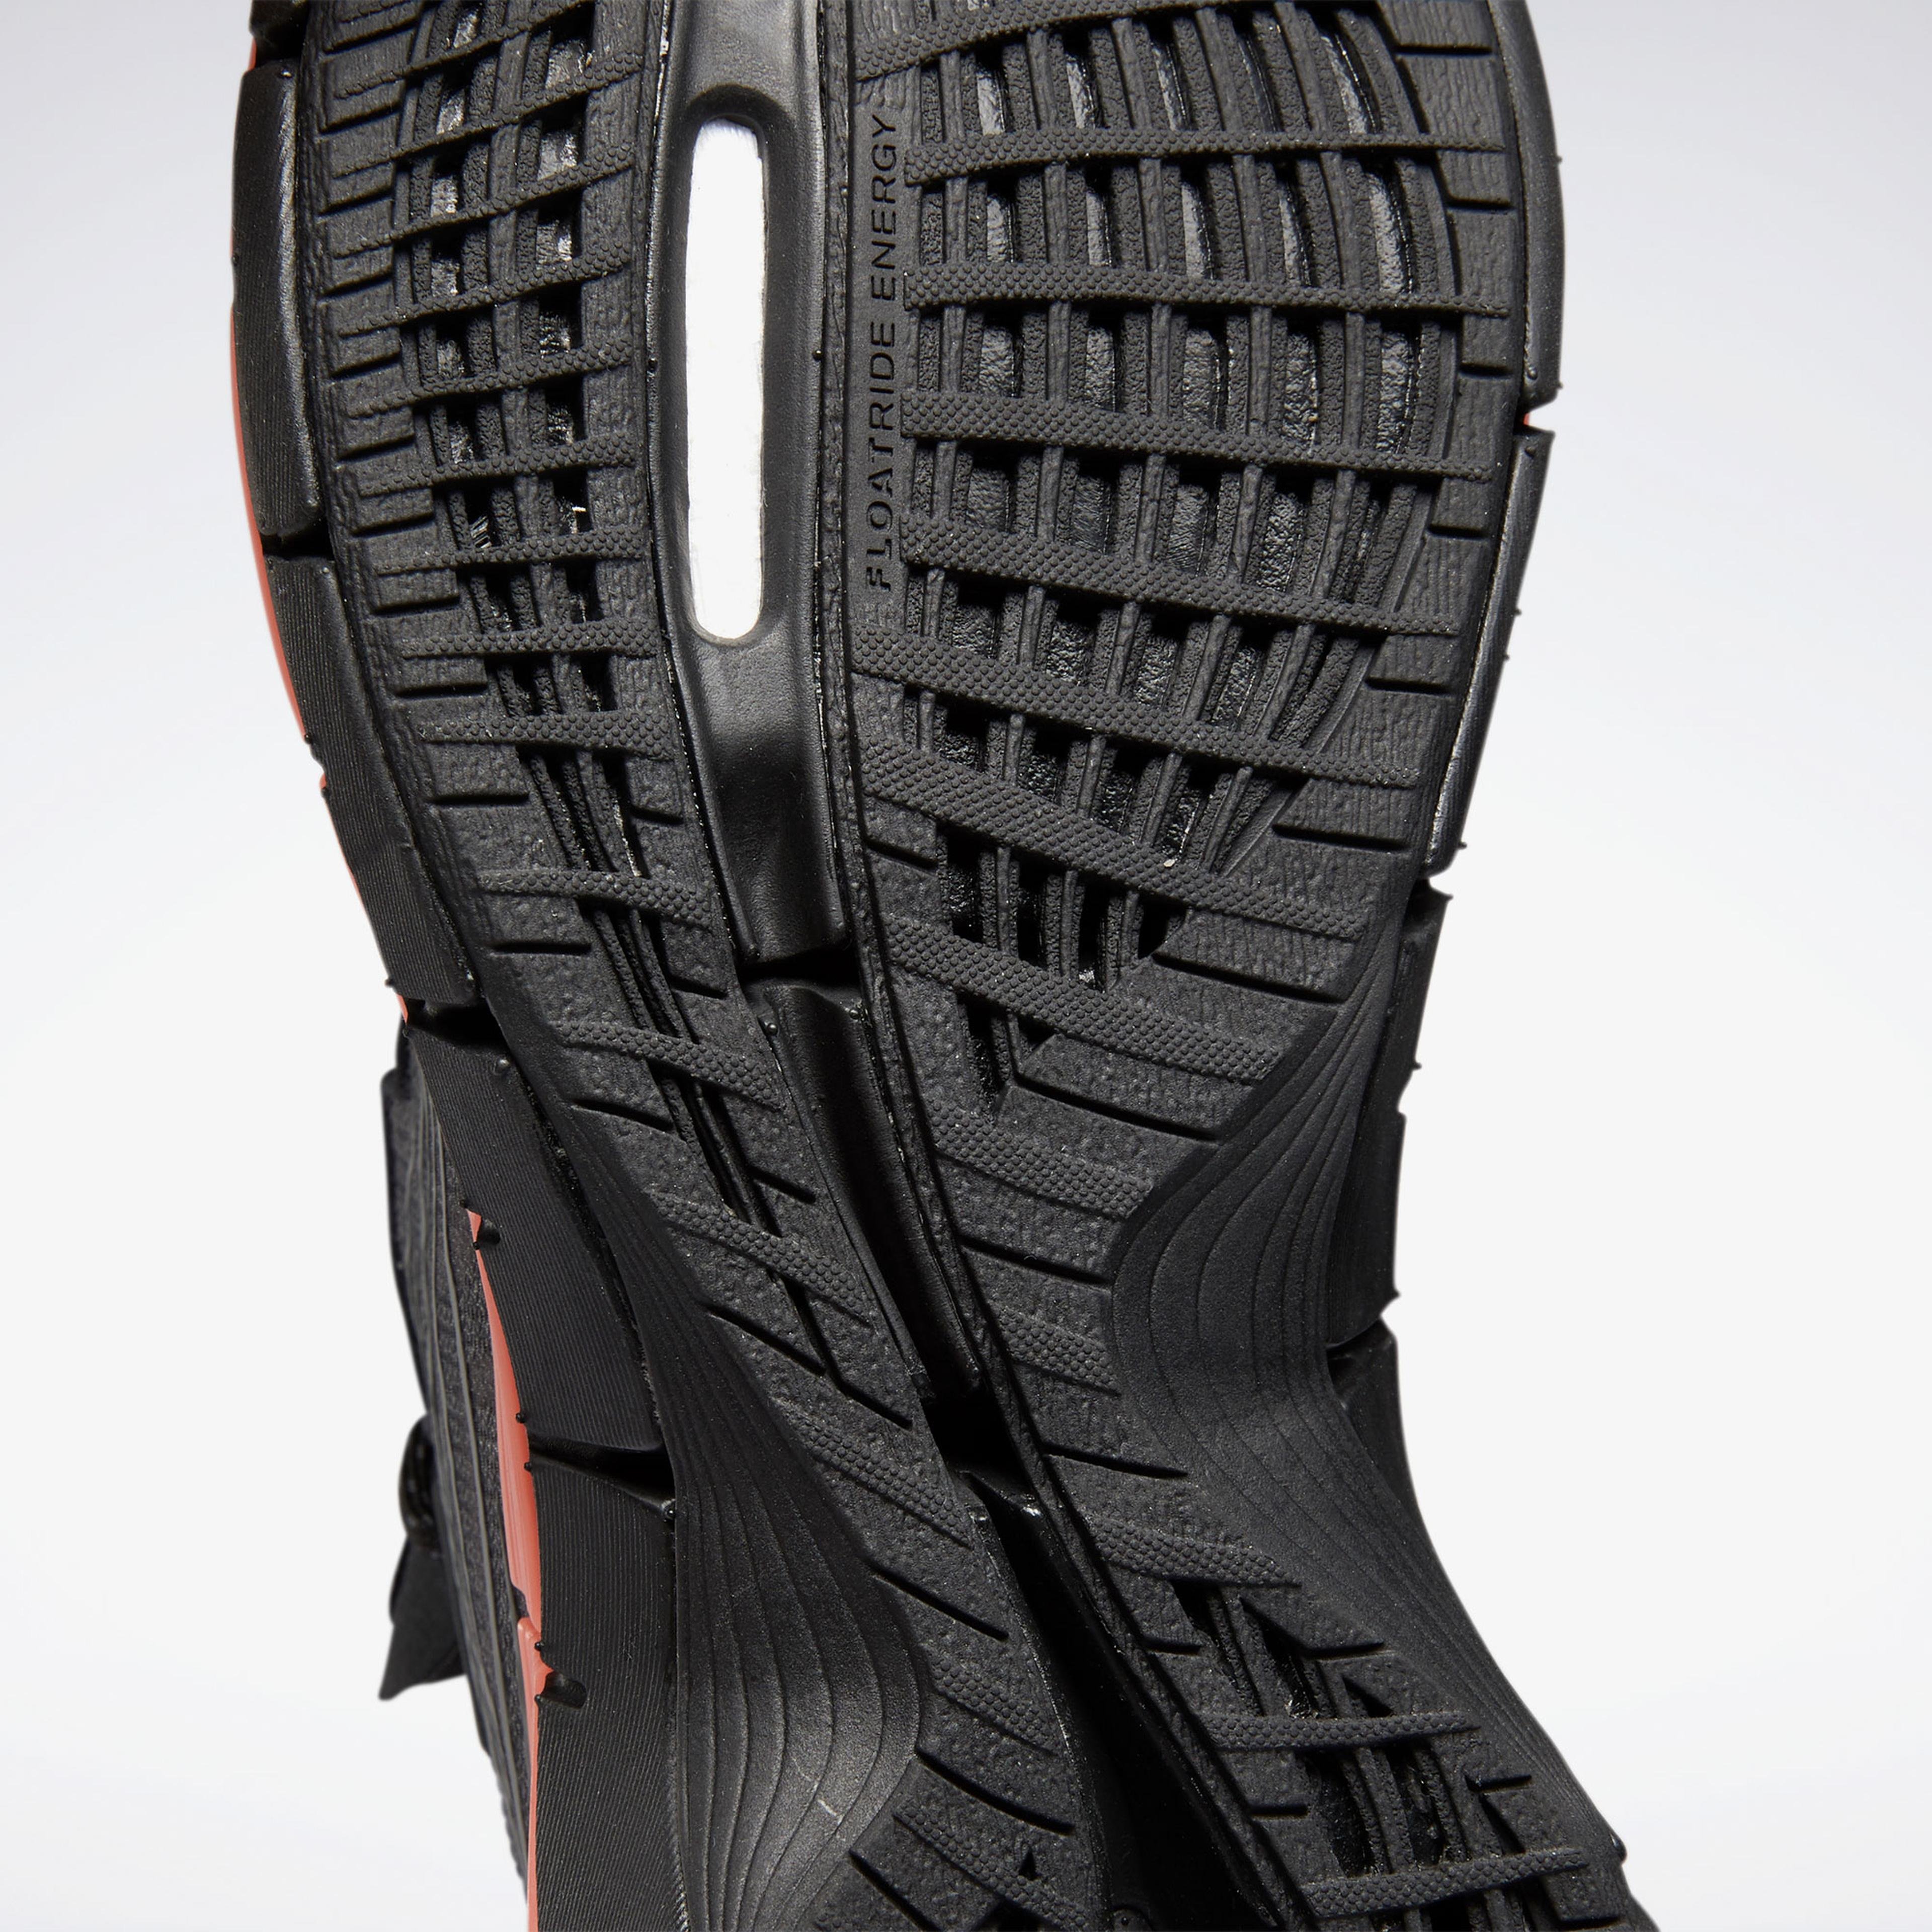 Reebok Zig Kinetica II Unisex Siyah Spor Ayakkabı